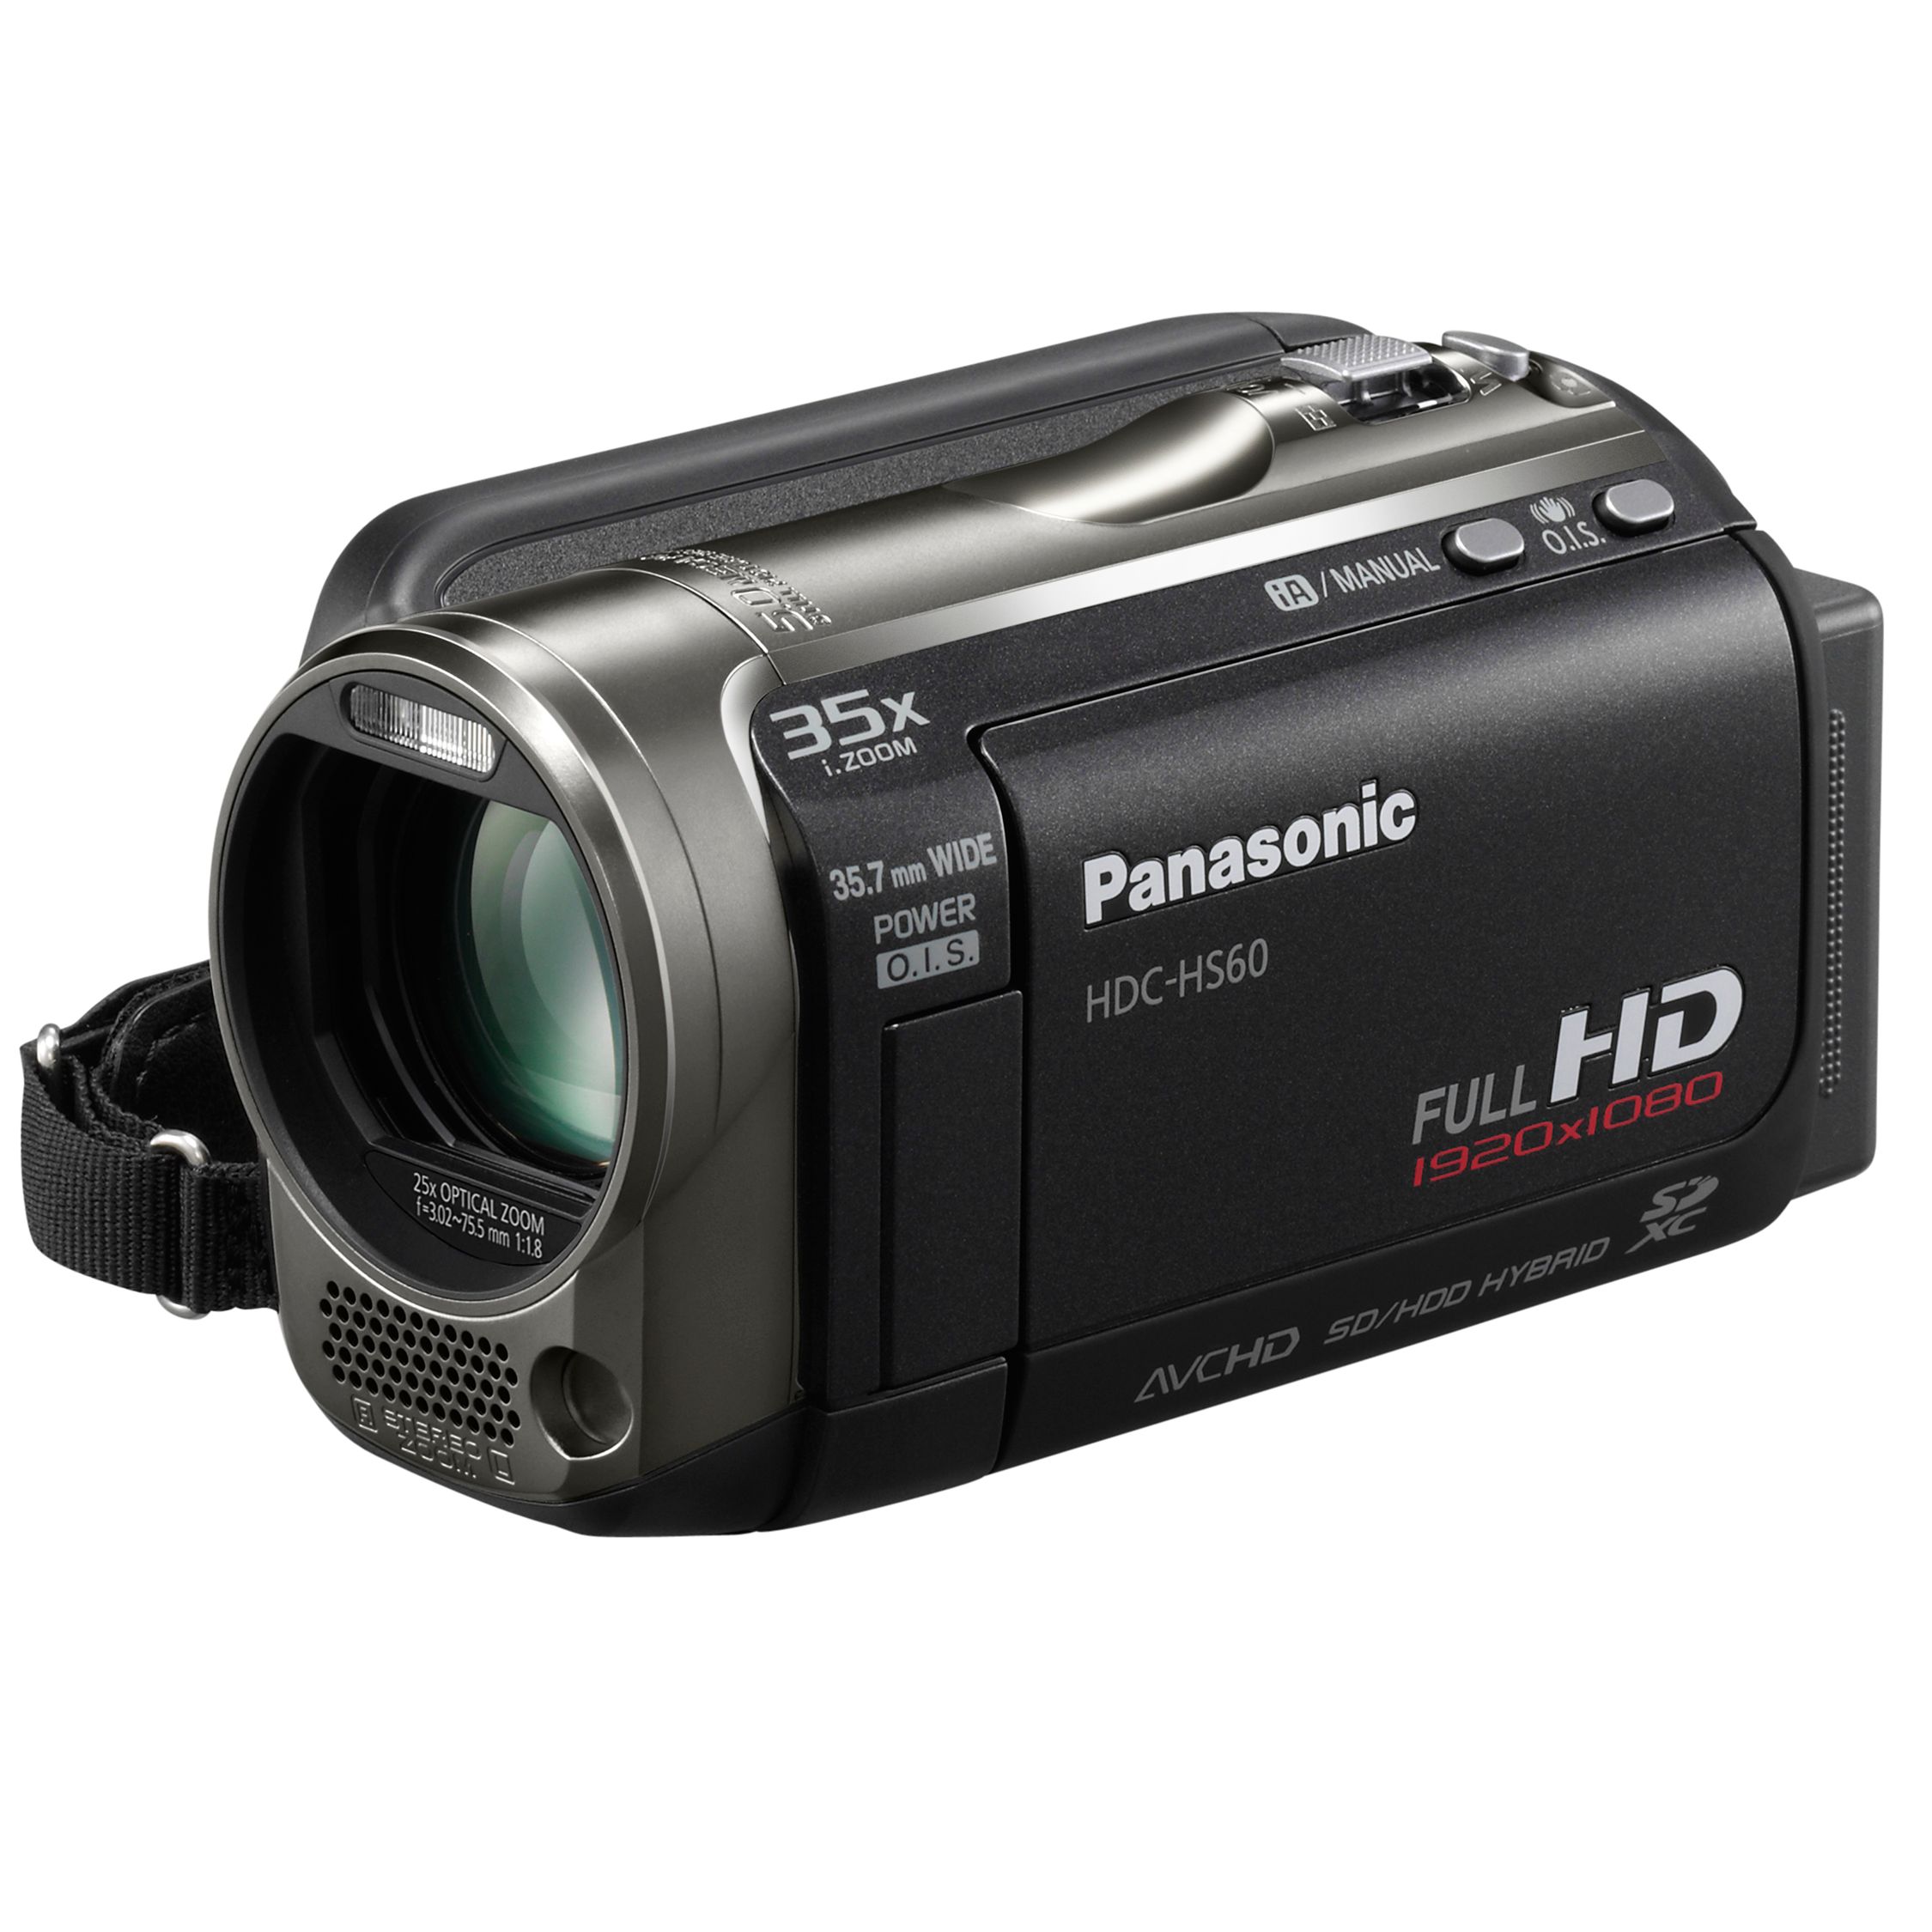 Panasonic HDC-HS60EB-K 120GB Hard Drive SD Camcorder, Black at John Lewis